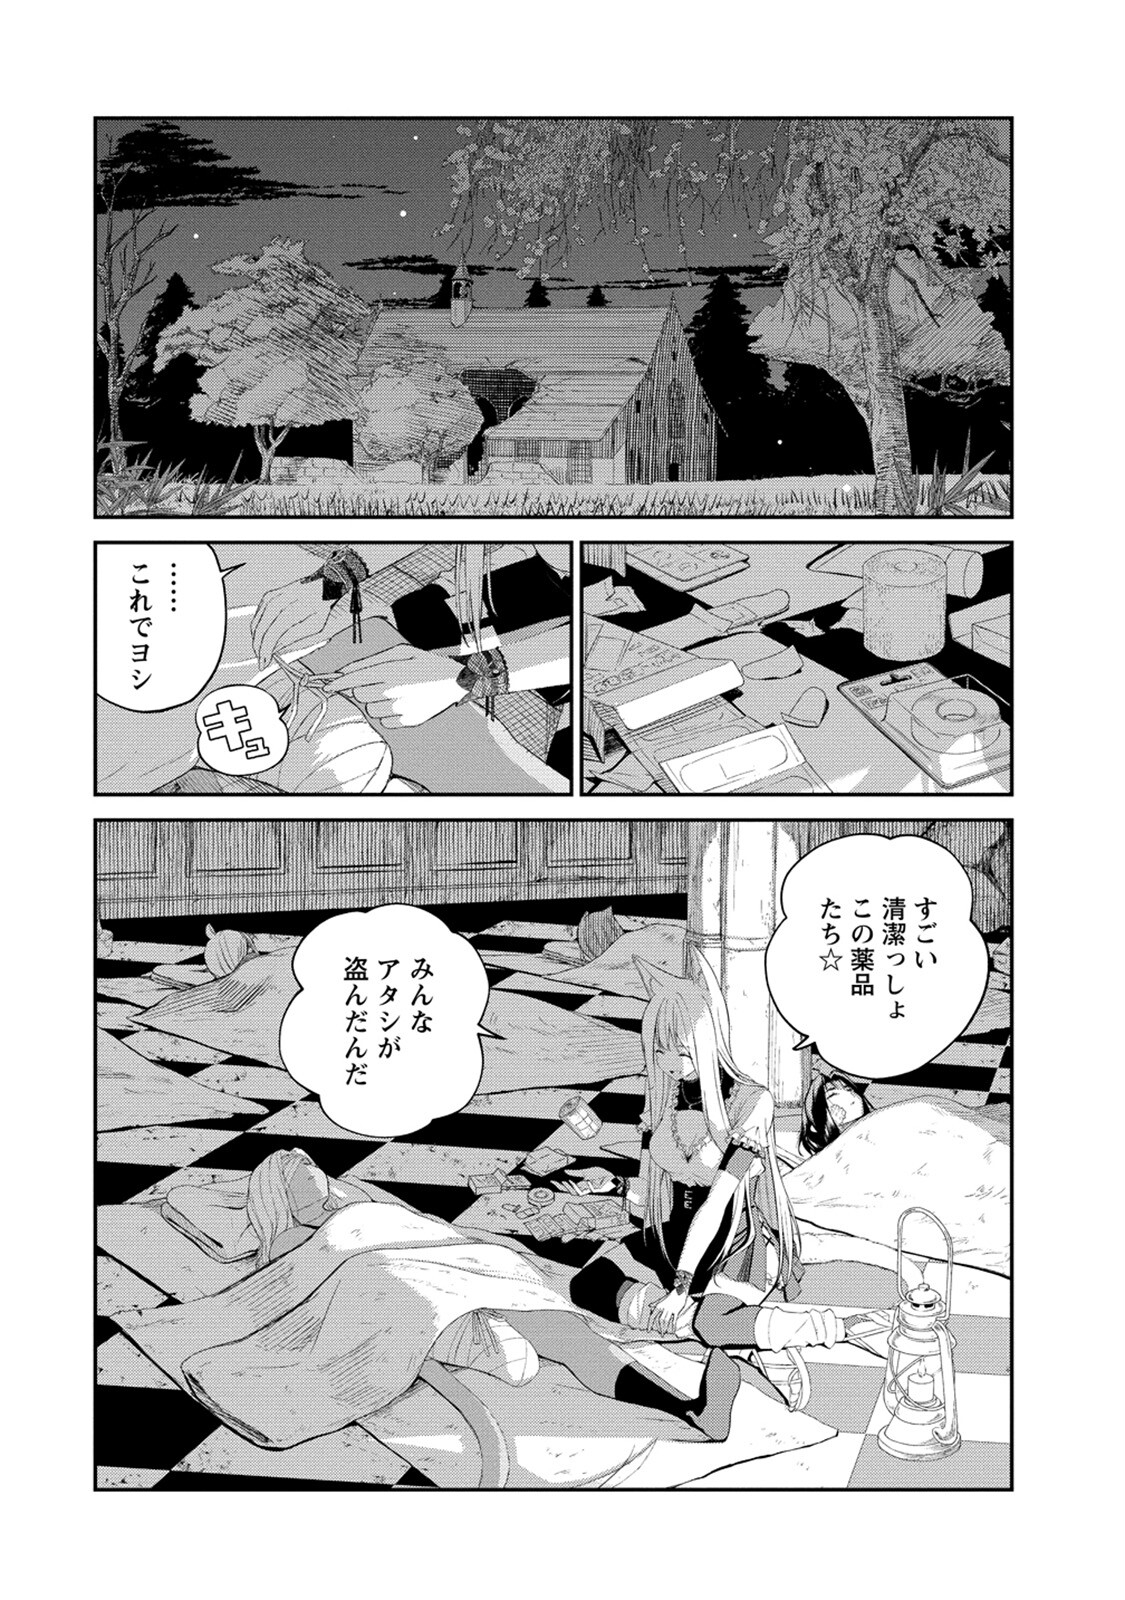 Isekai Konbini Omotenashi - Chapter 4 - Page 2